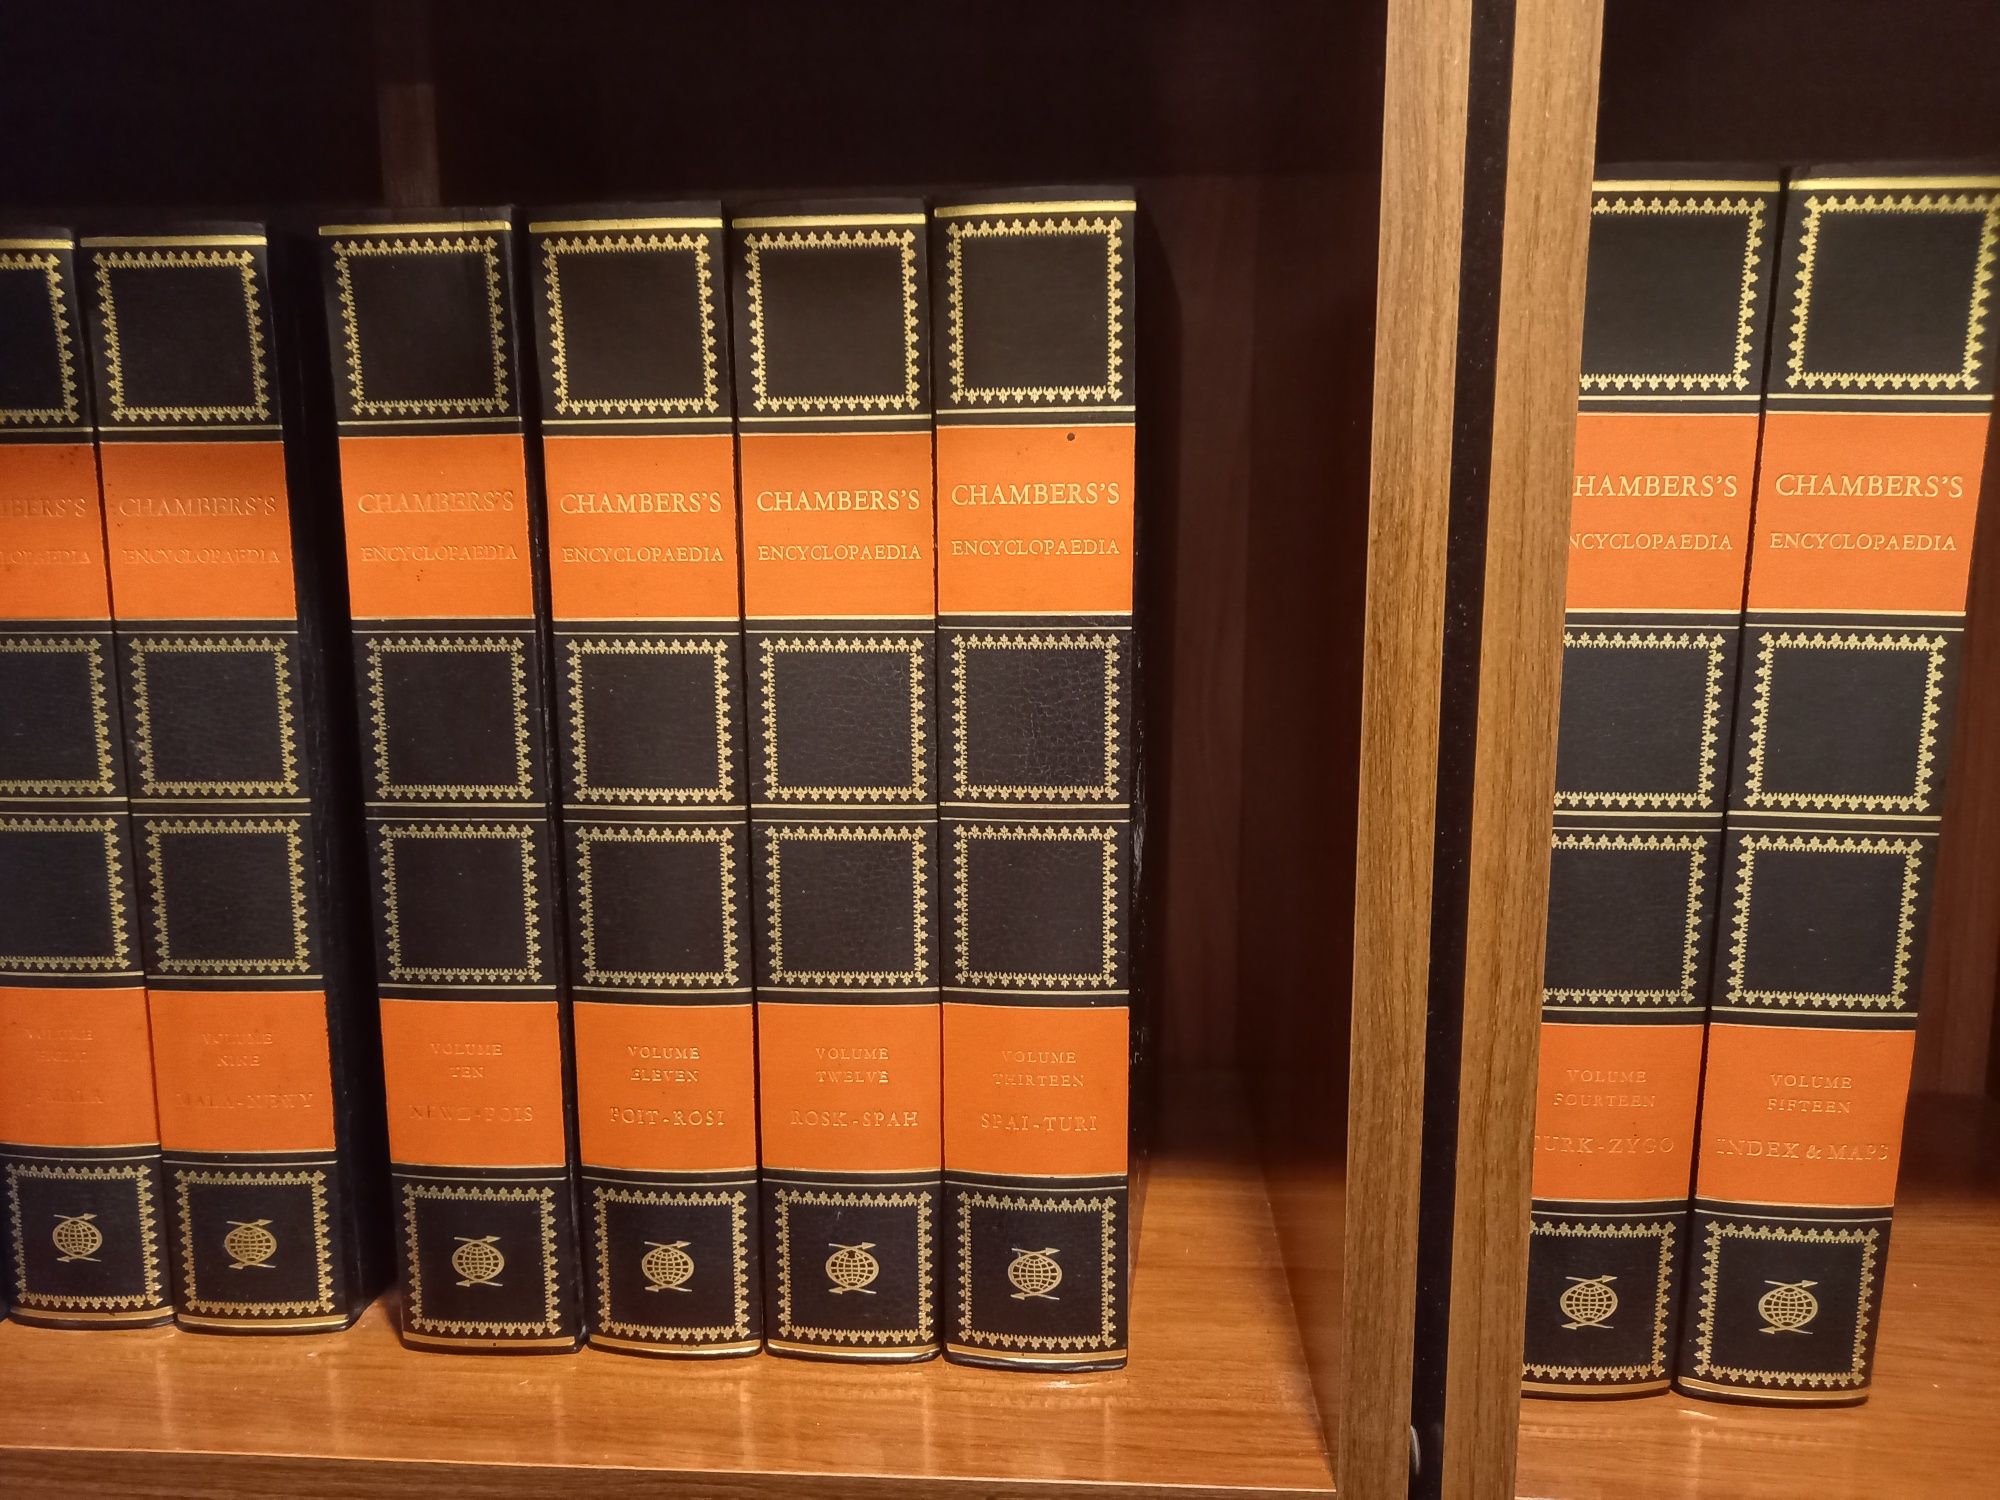 Chambers's Encyclopaedia 15 volumes